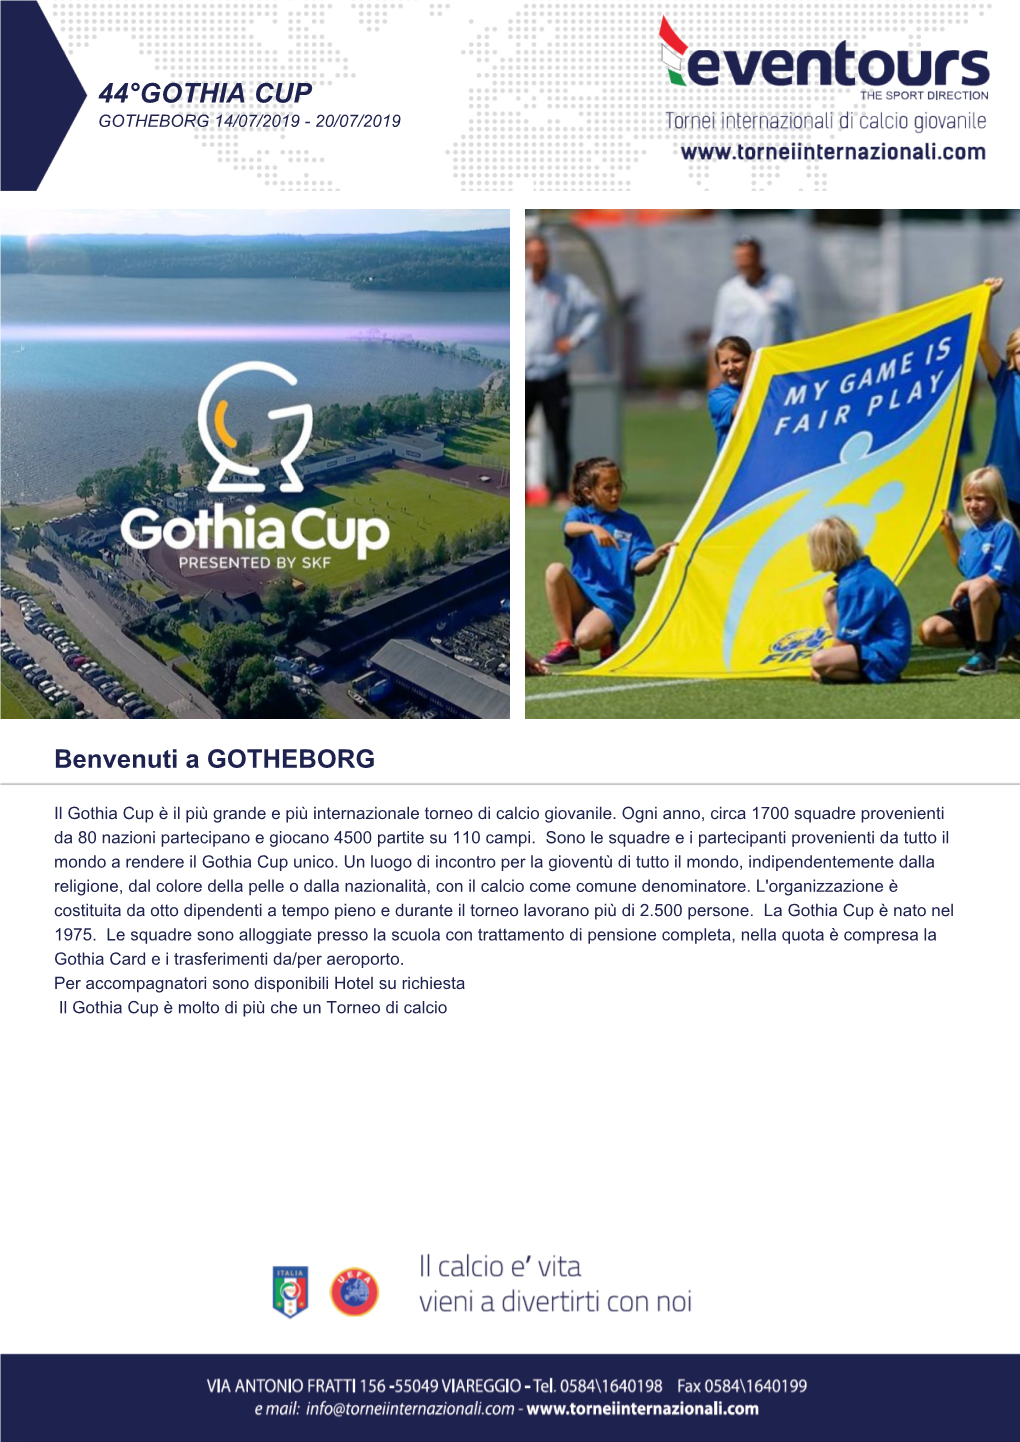 44°Gothia Cup Gotheborg 14/07/2019 - 20/07/2019